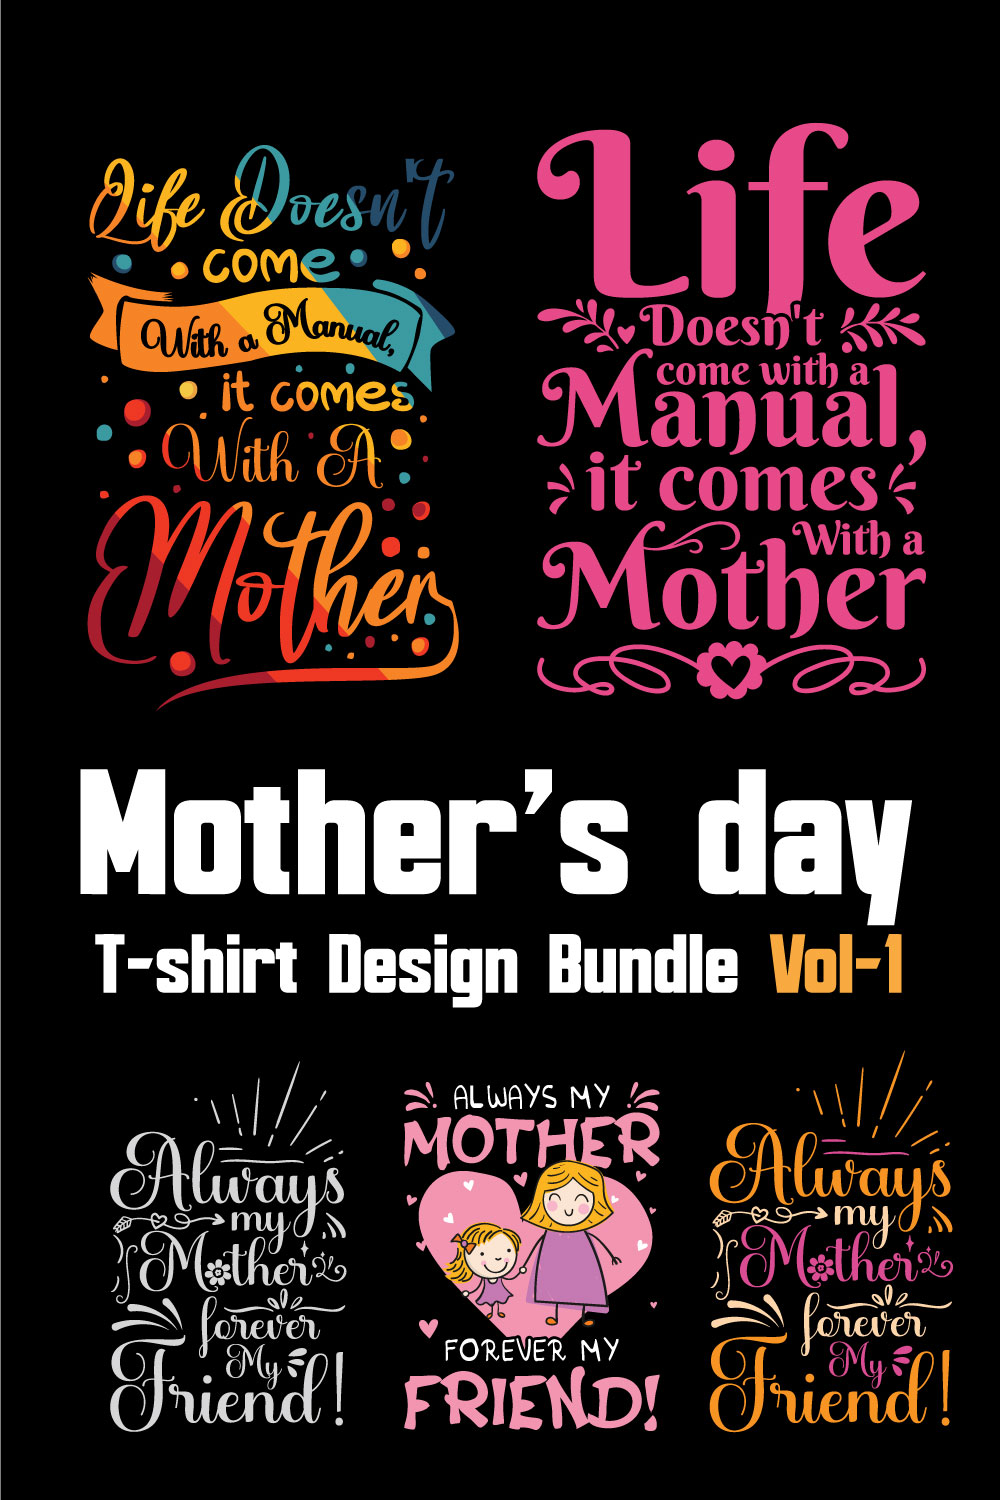 Mother's Day T-shirt Design Bundle Vol-1 pinterest preview image.